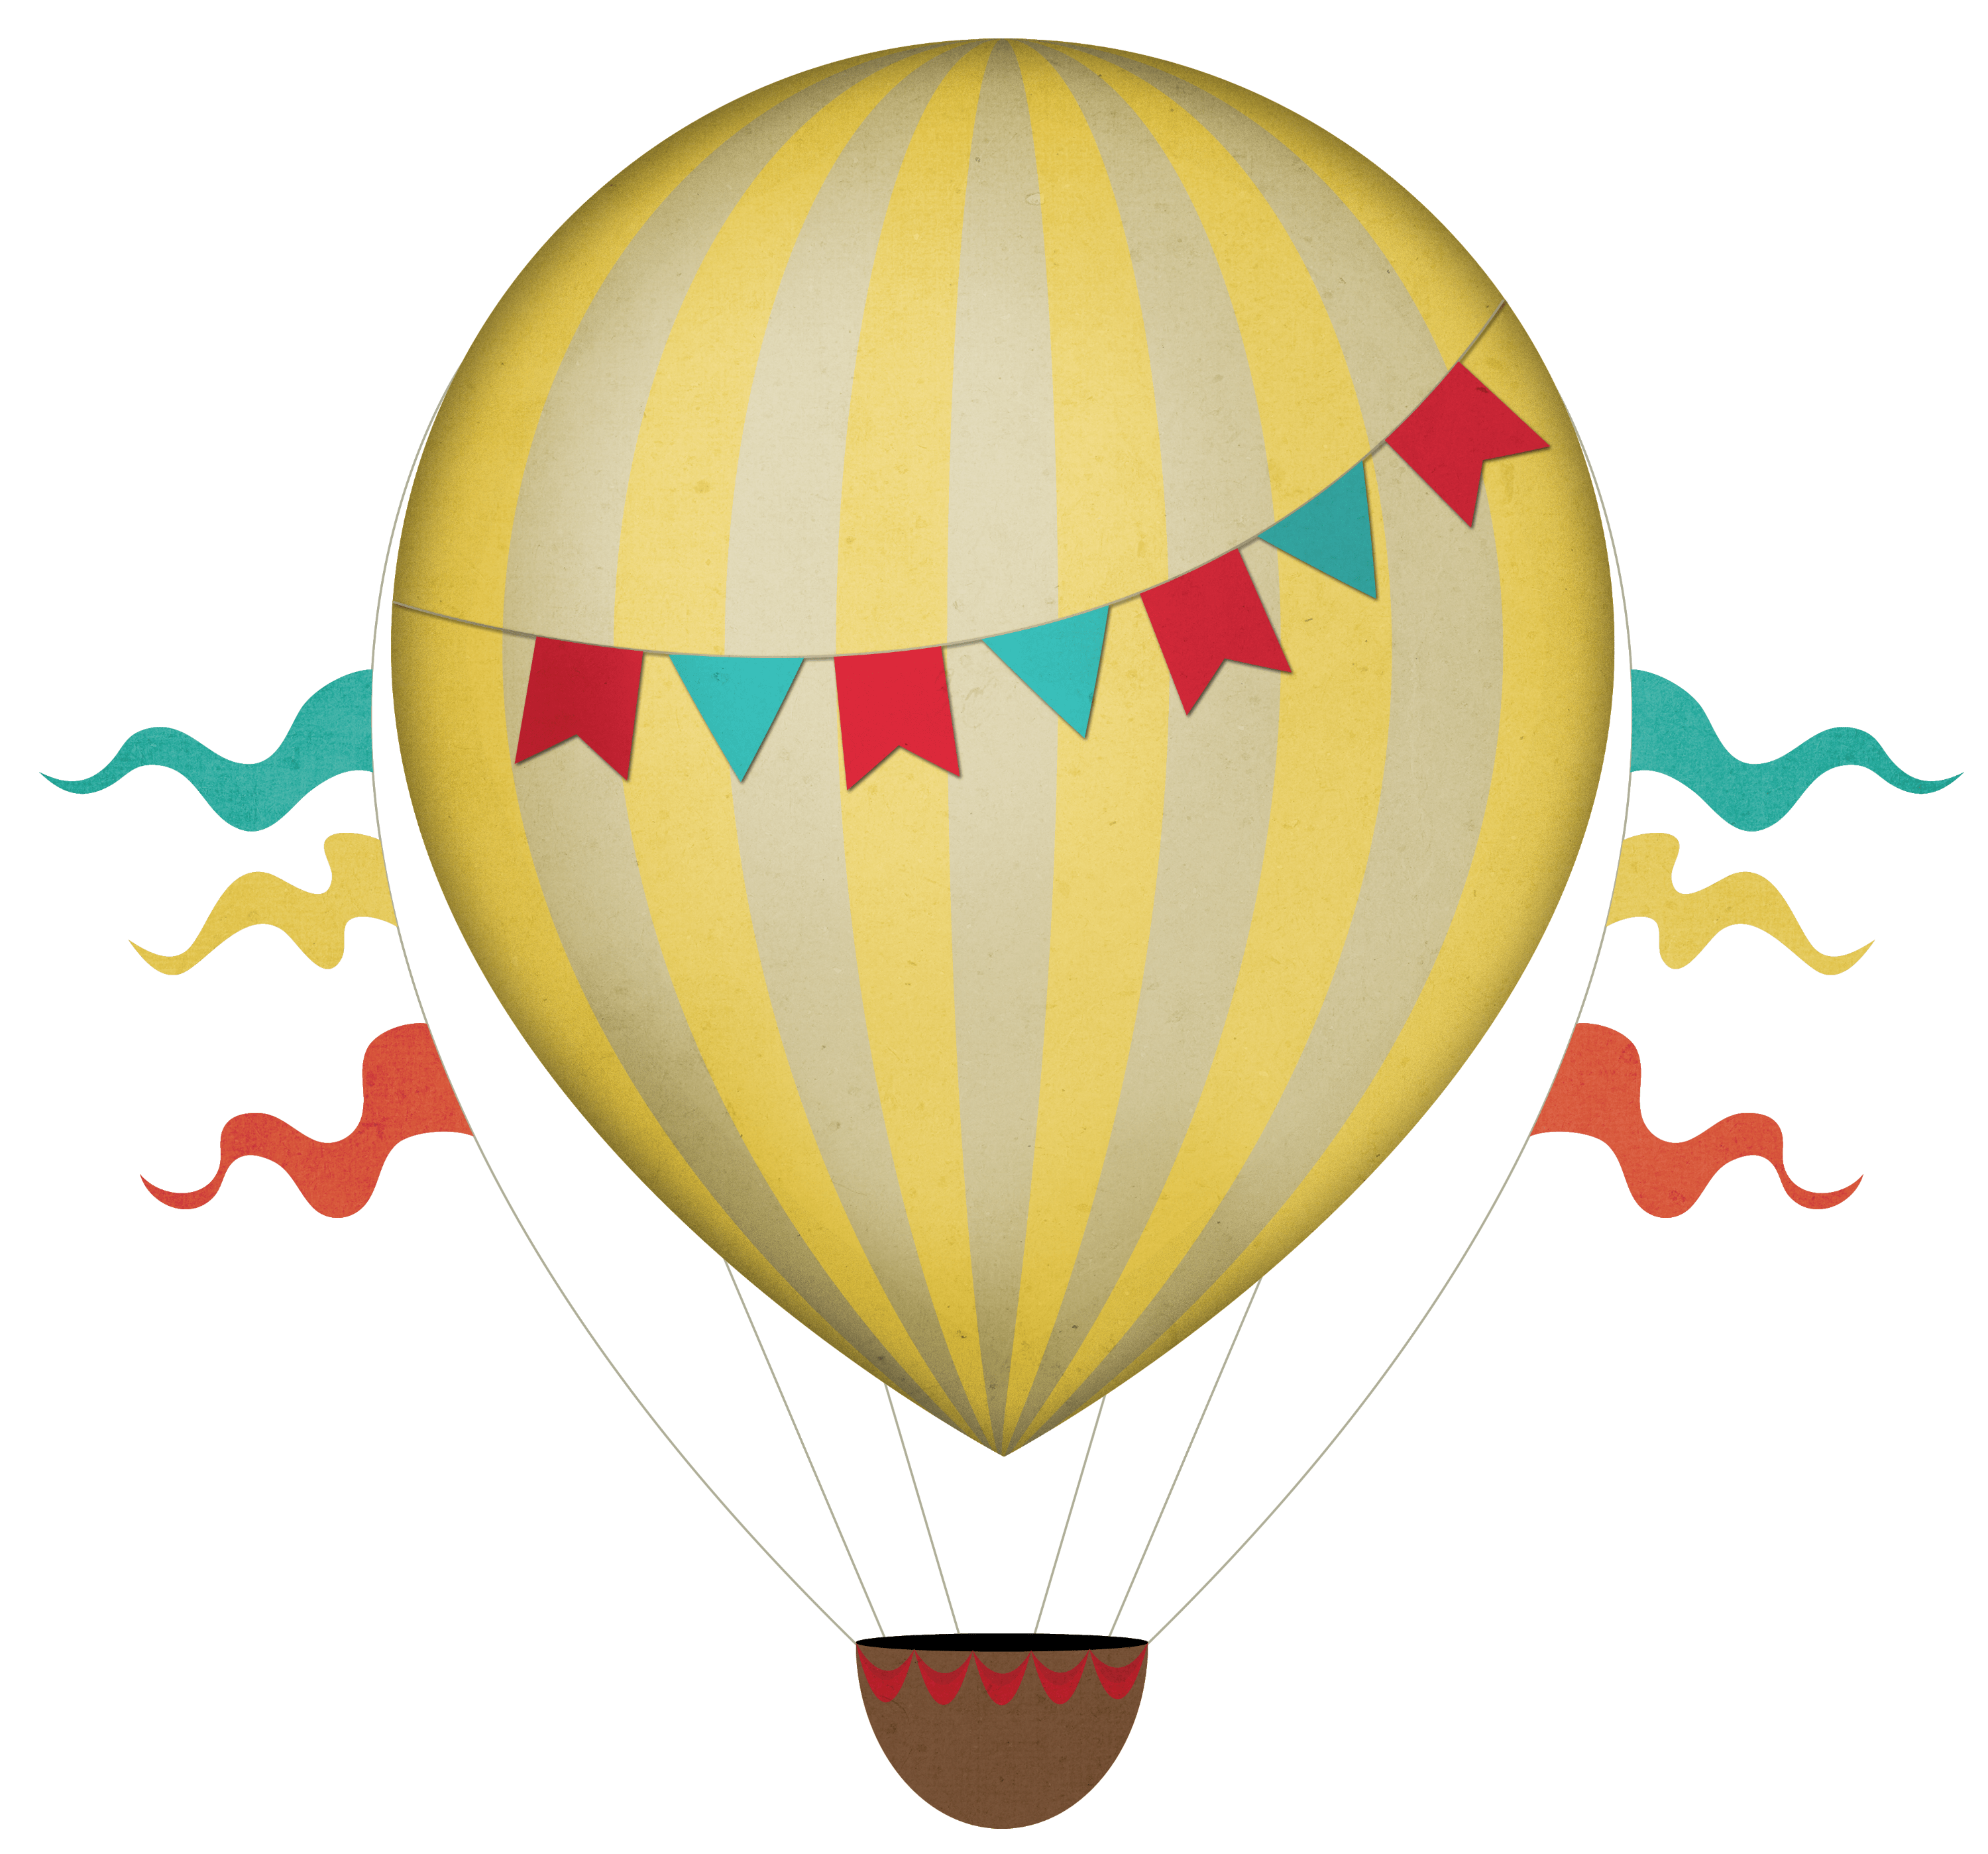 Hot Air Balloon Clip Art - Hot Air Balloon Images - Clip Art Library